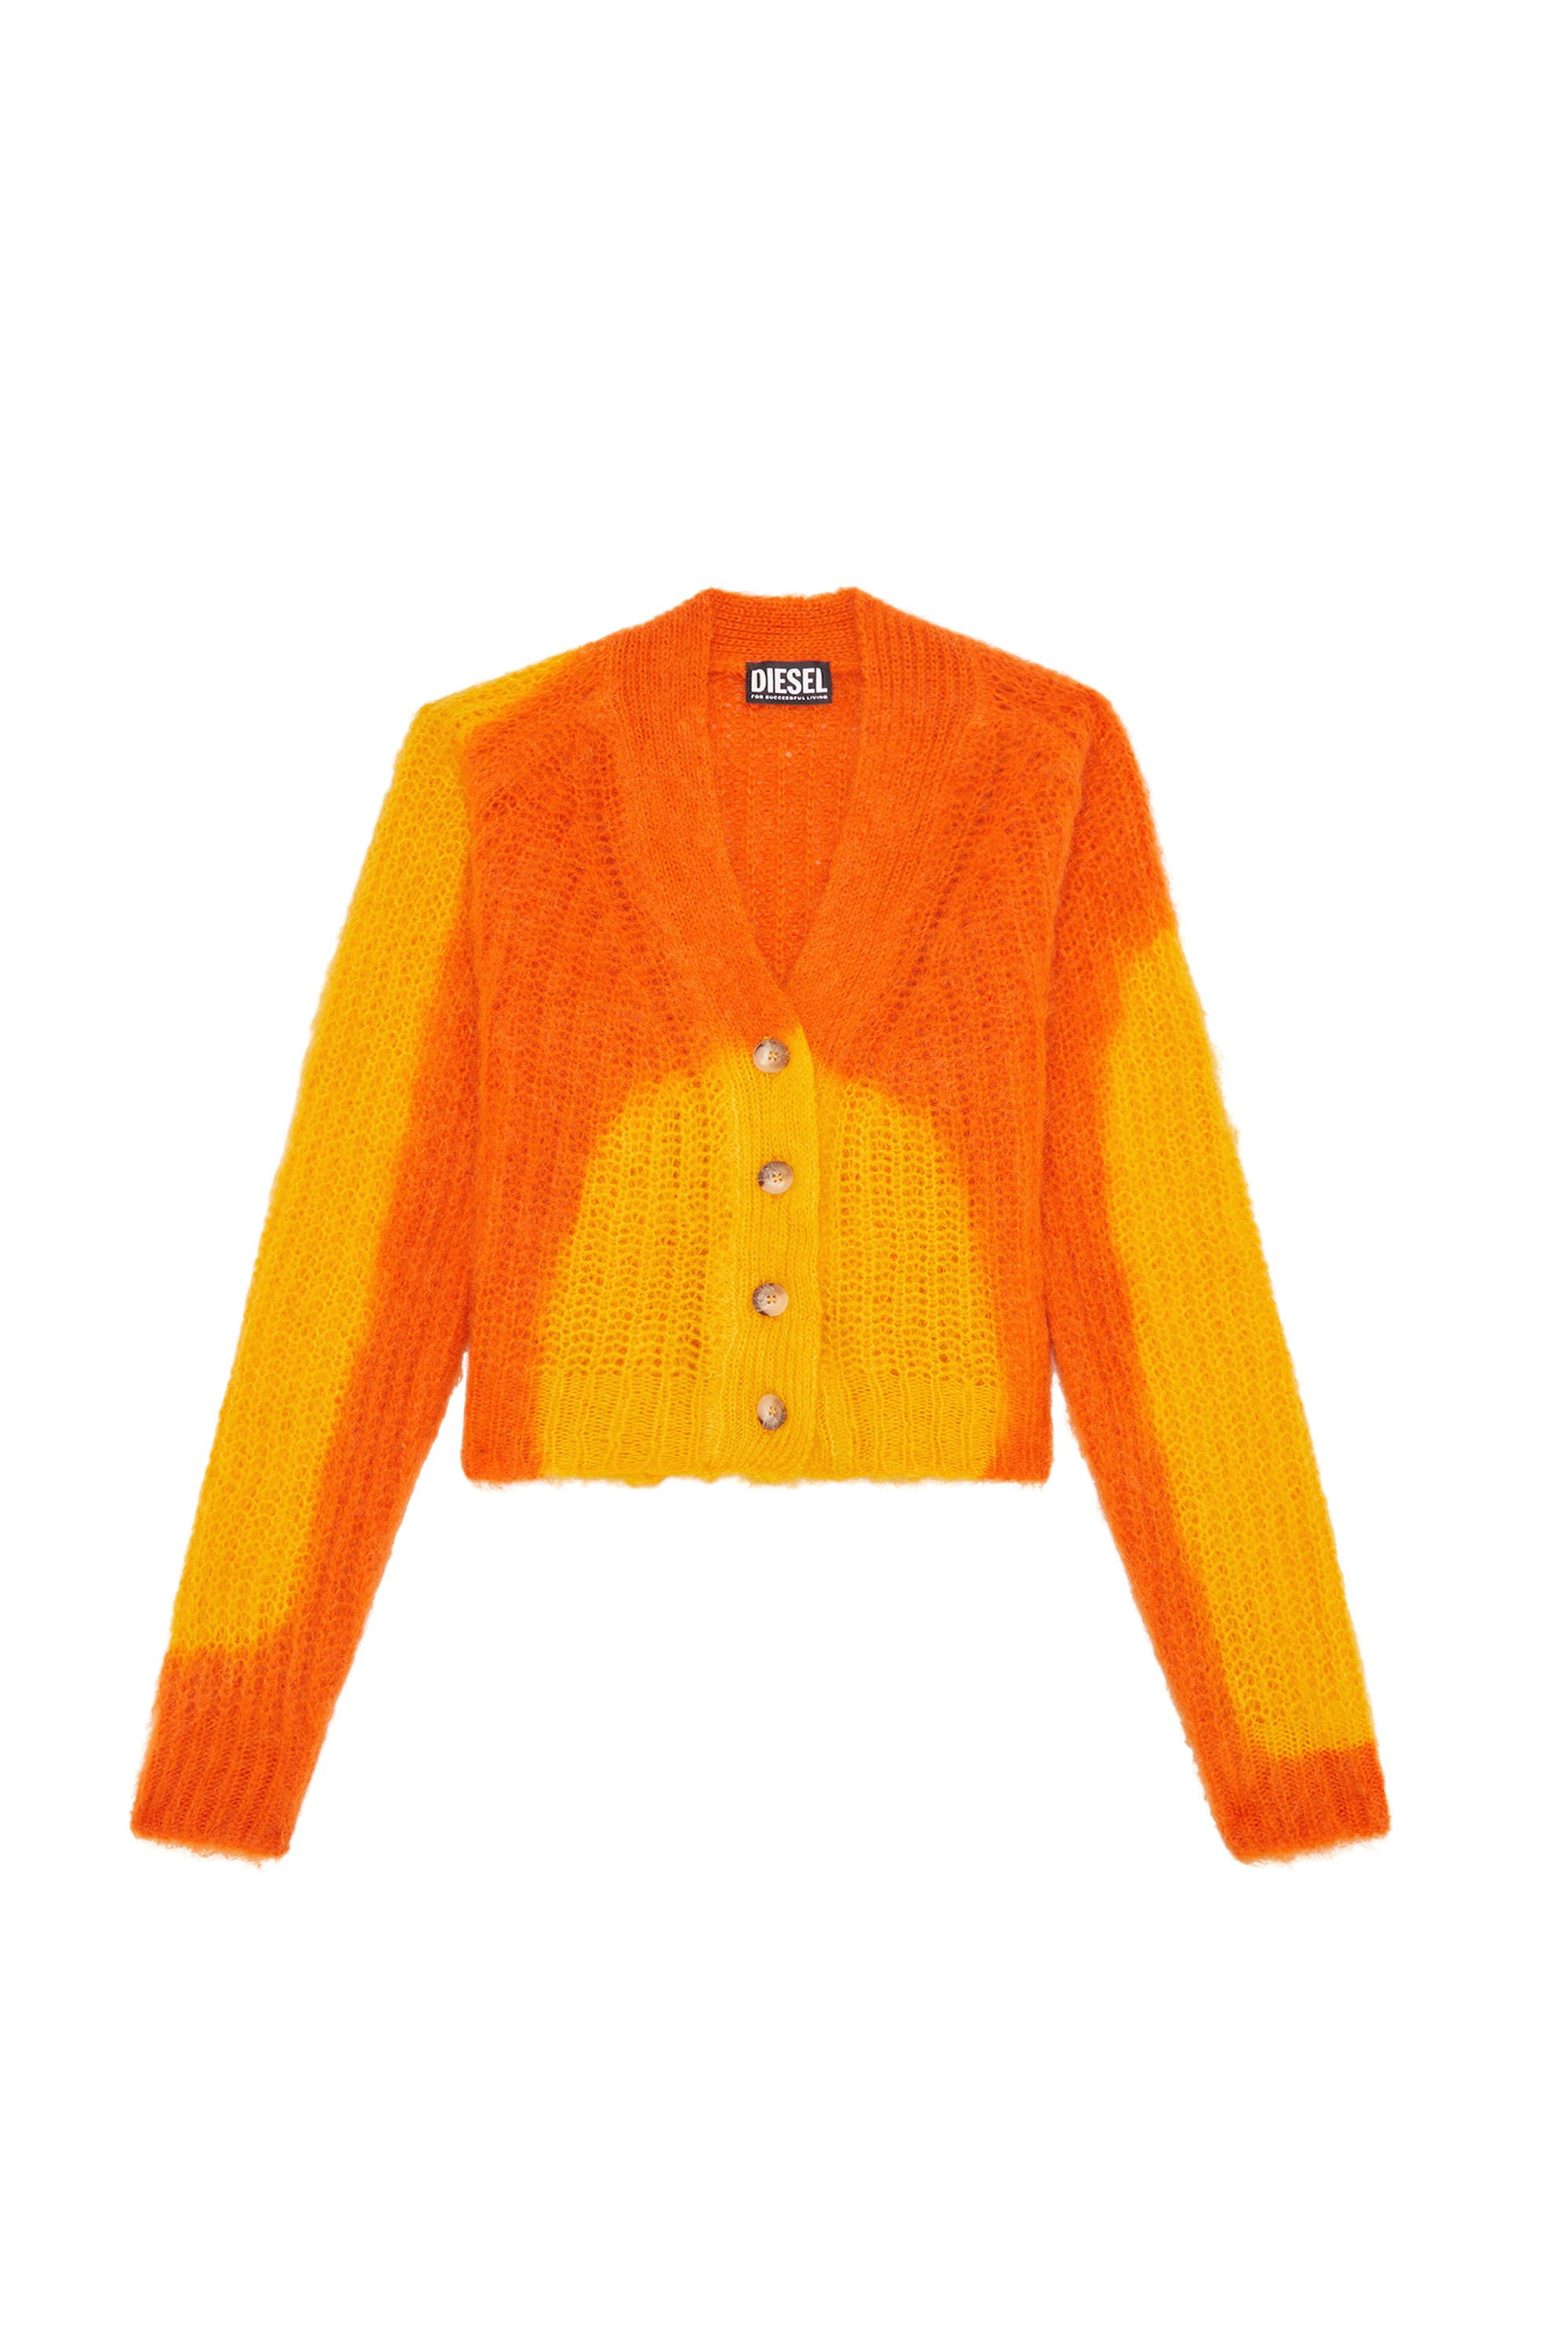 M-ILLY, Orange/Yellow - Knitwear